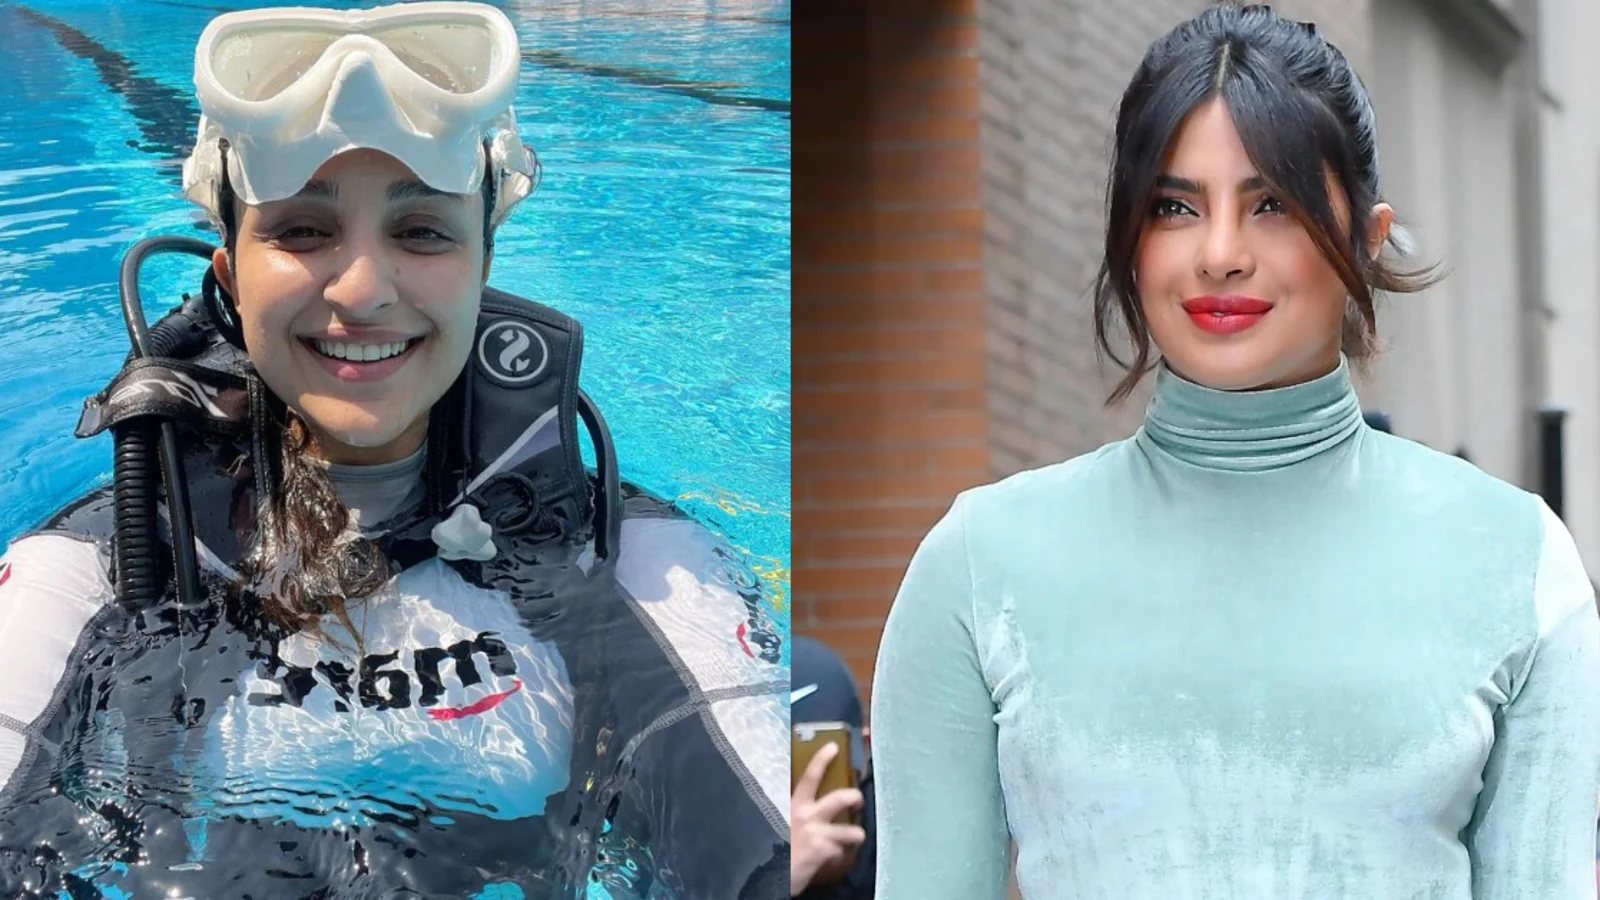 Priyanka Chopra calls cousin Parineeti Chopra ‘gorgeous’ as she poses in her scuba diving outfit. See pic